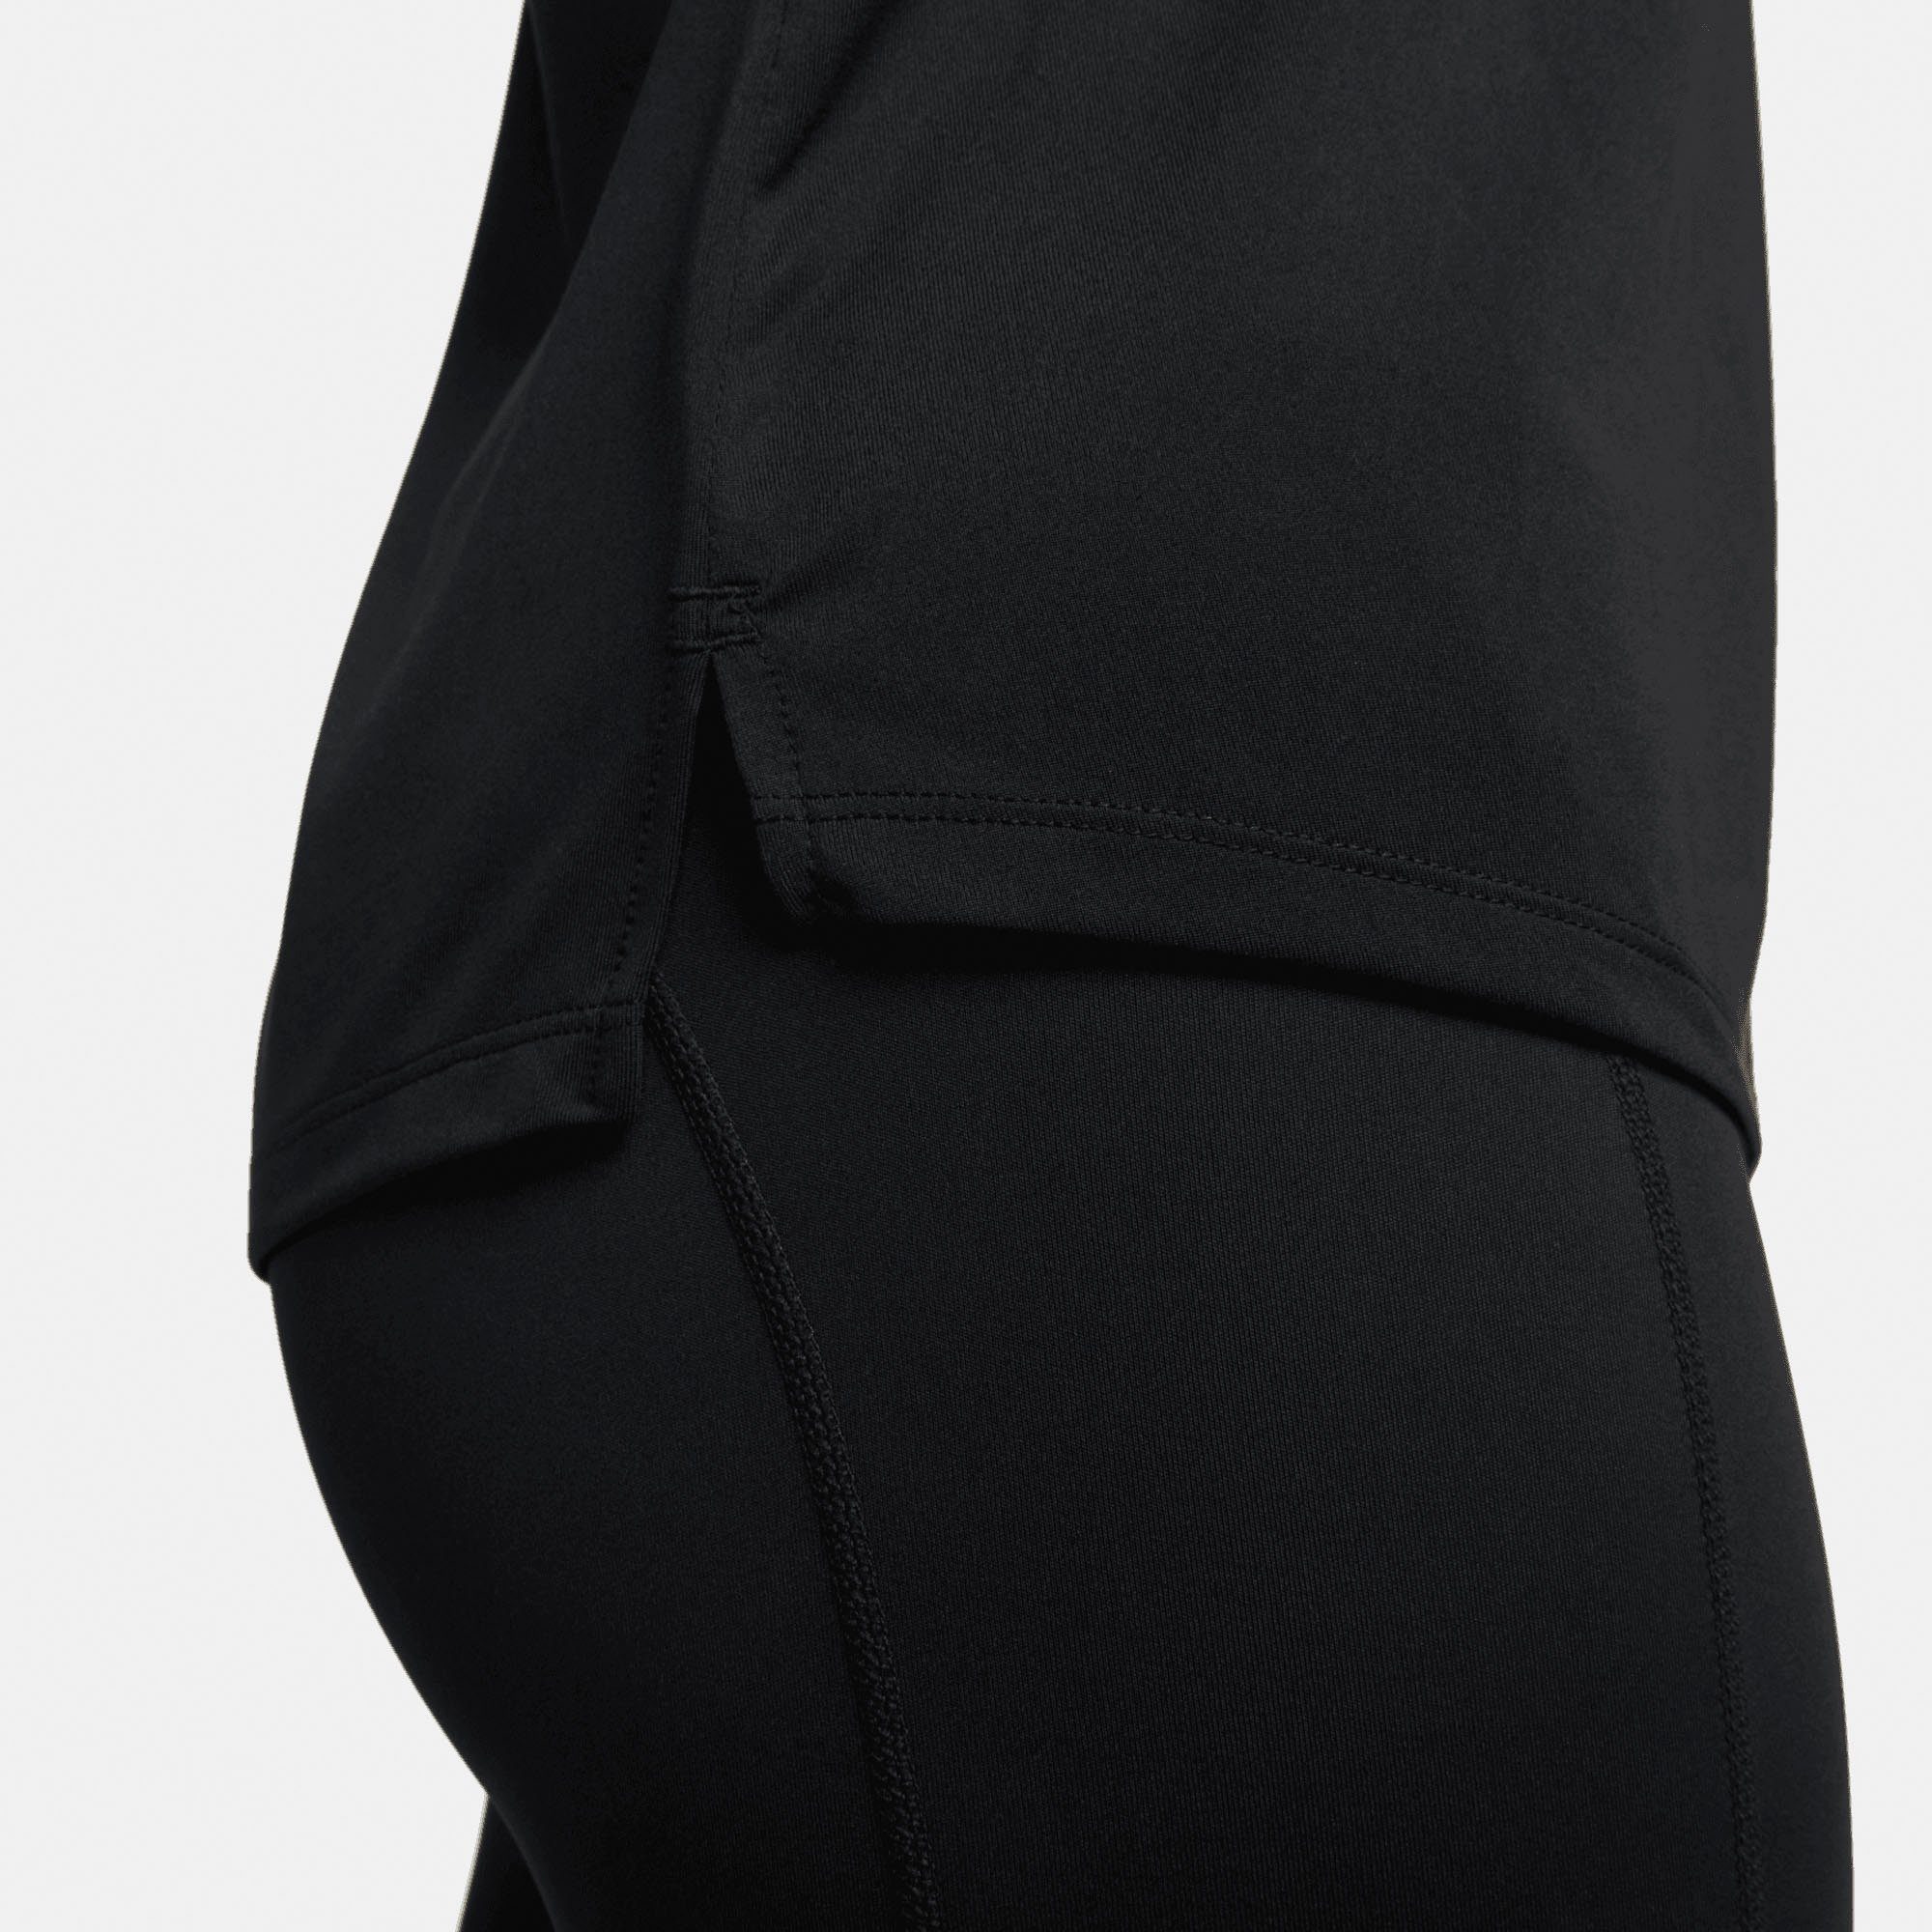 One Nike Women's Swoosh Dri-FIT BLACK Short-Sleeved Laufshirt Top